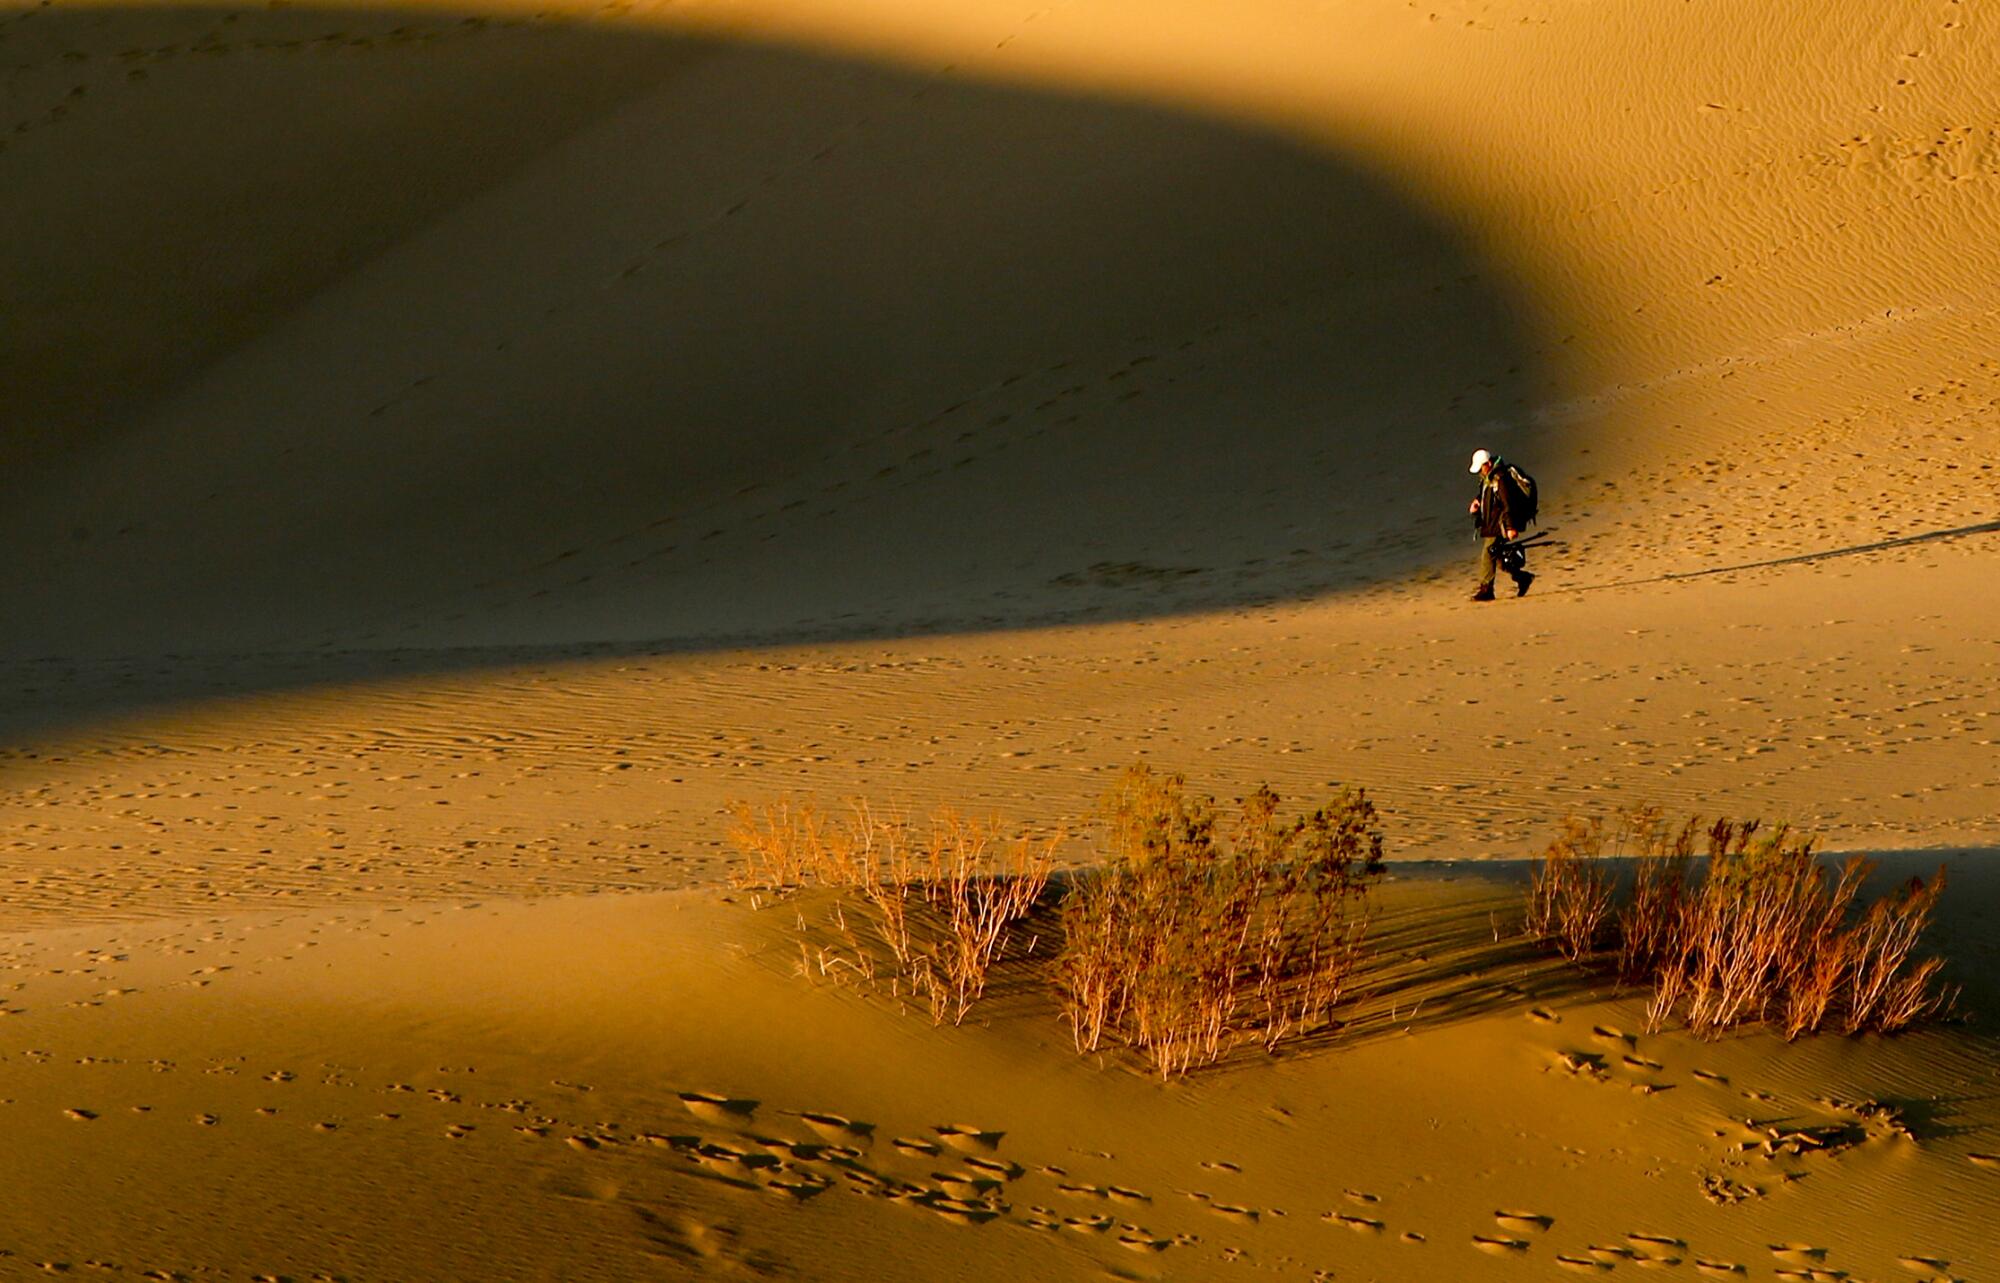 A lone figure treks across a sand dune.